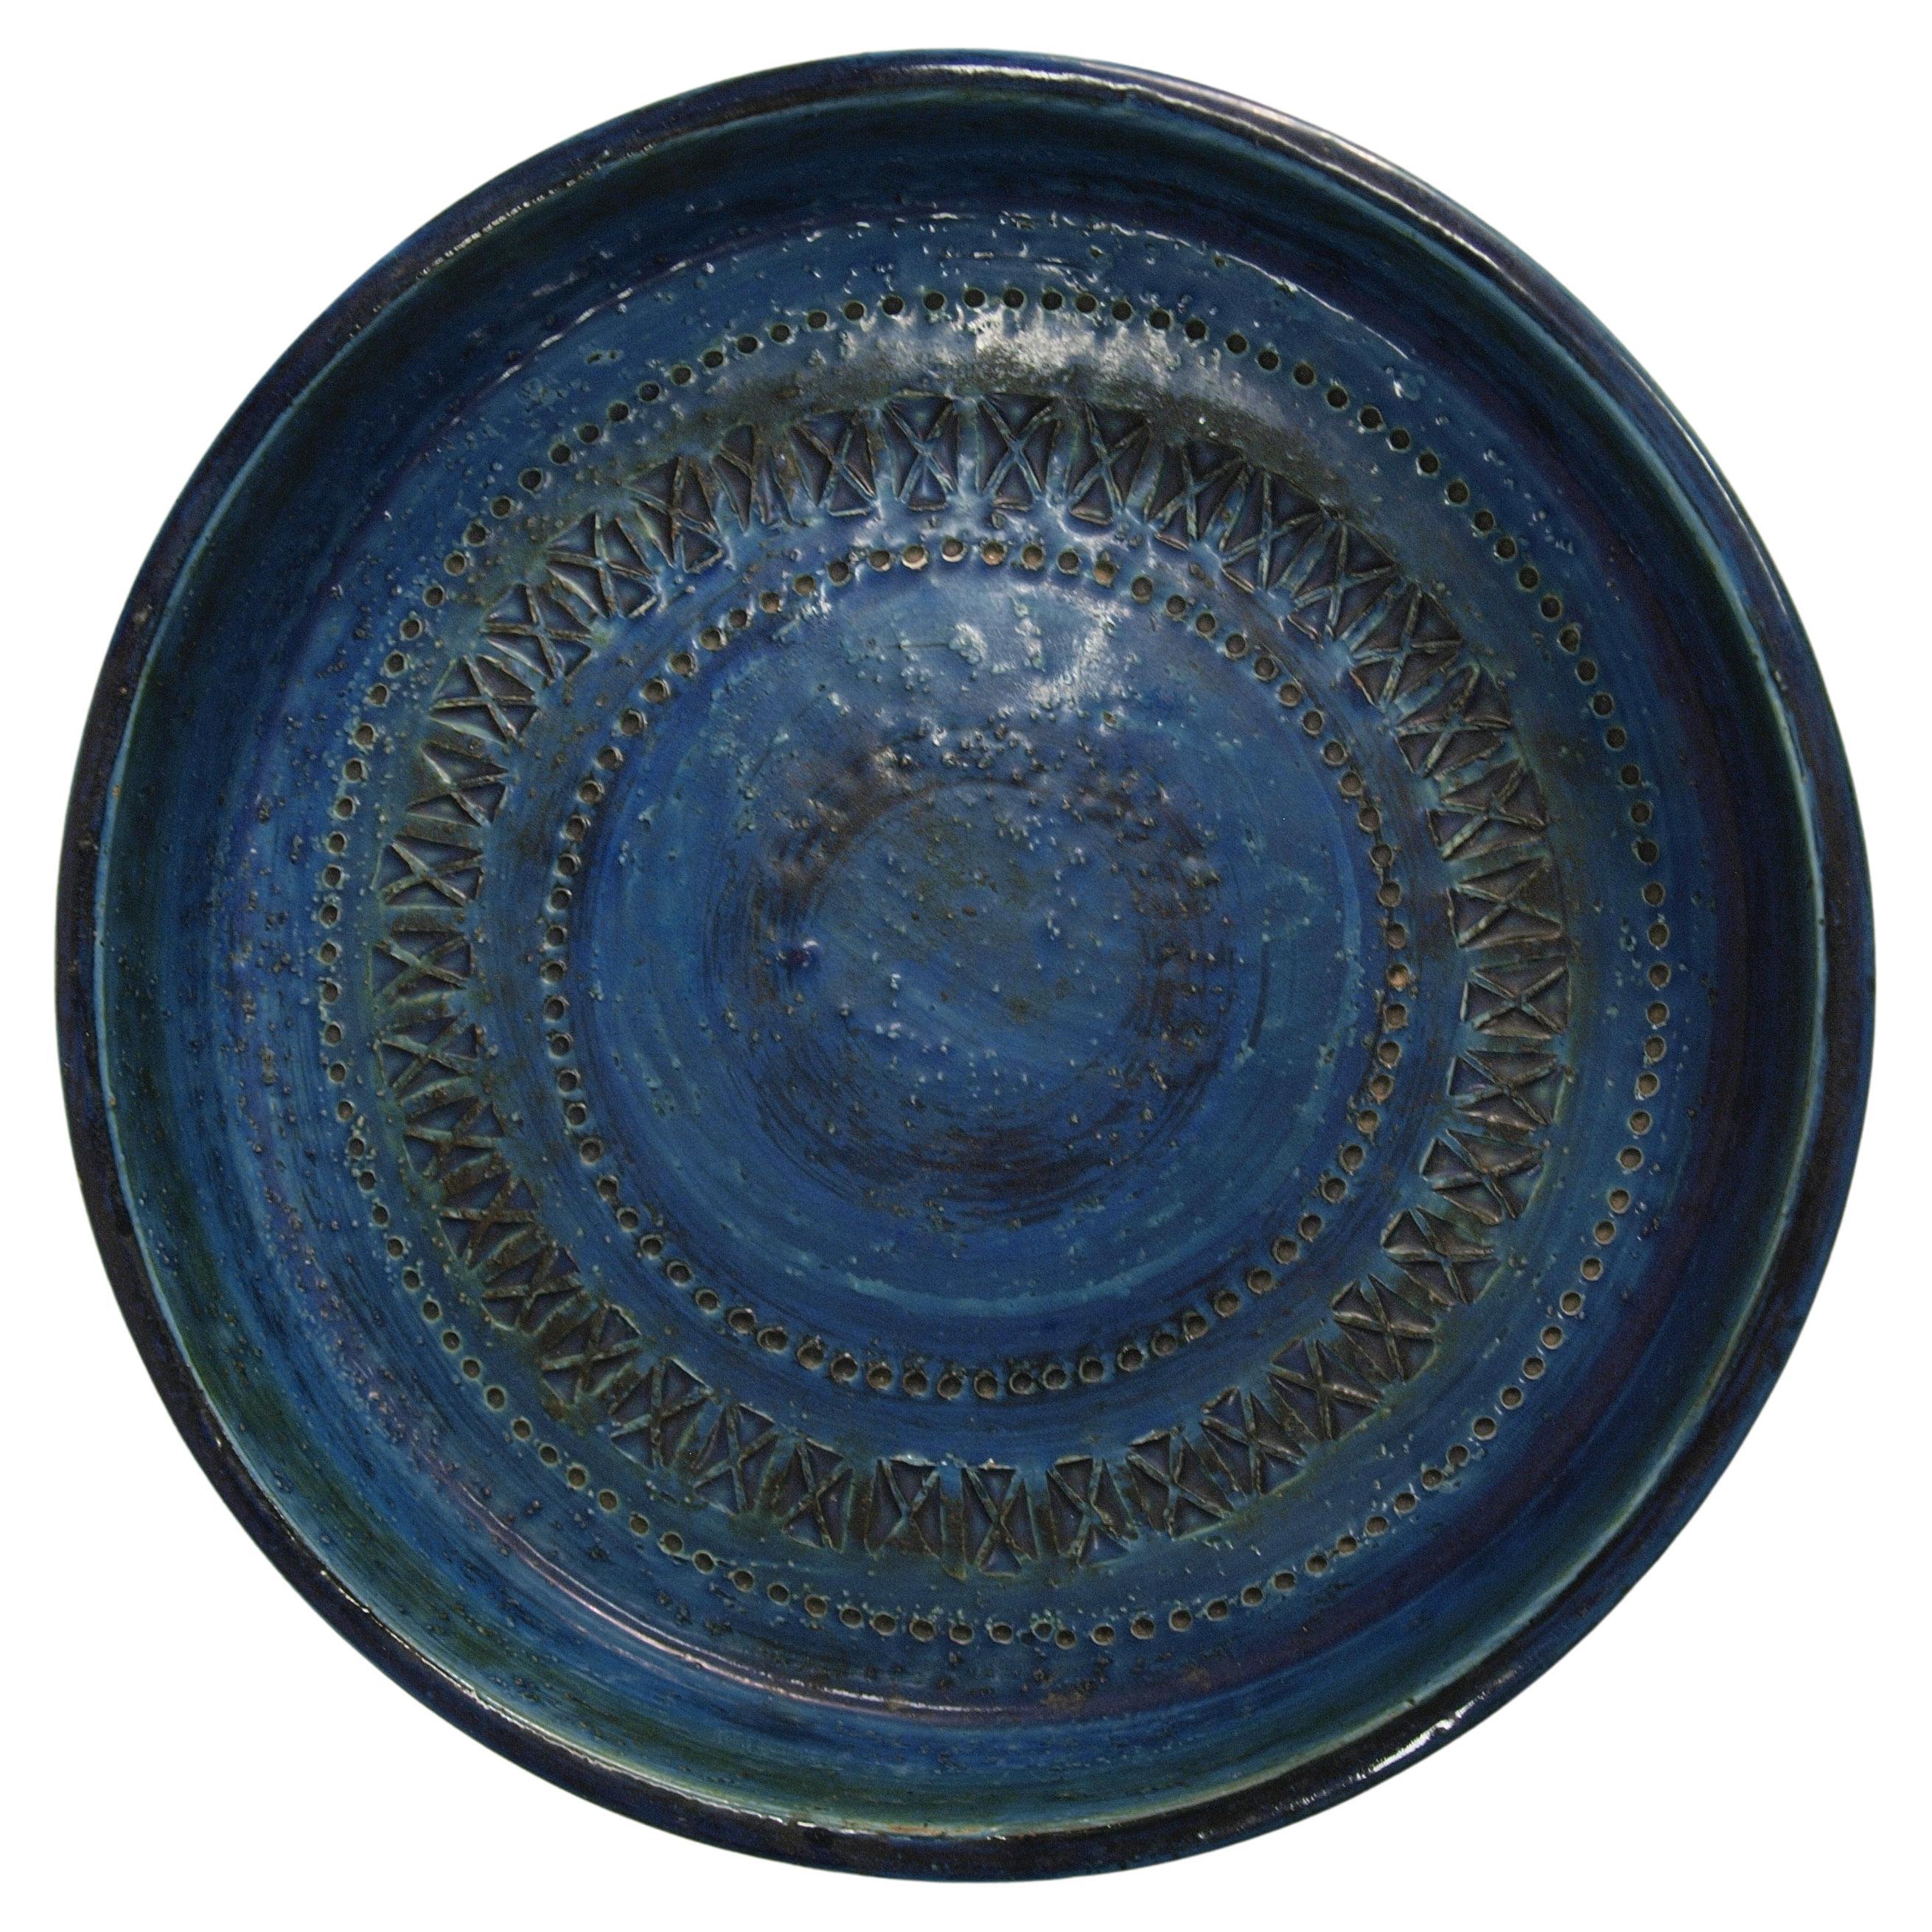 Aldo londi circular ceramic bowl, blue glazed, Bitossi, mid-20th century, good condition.